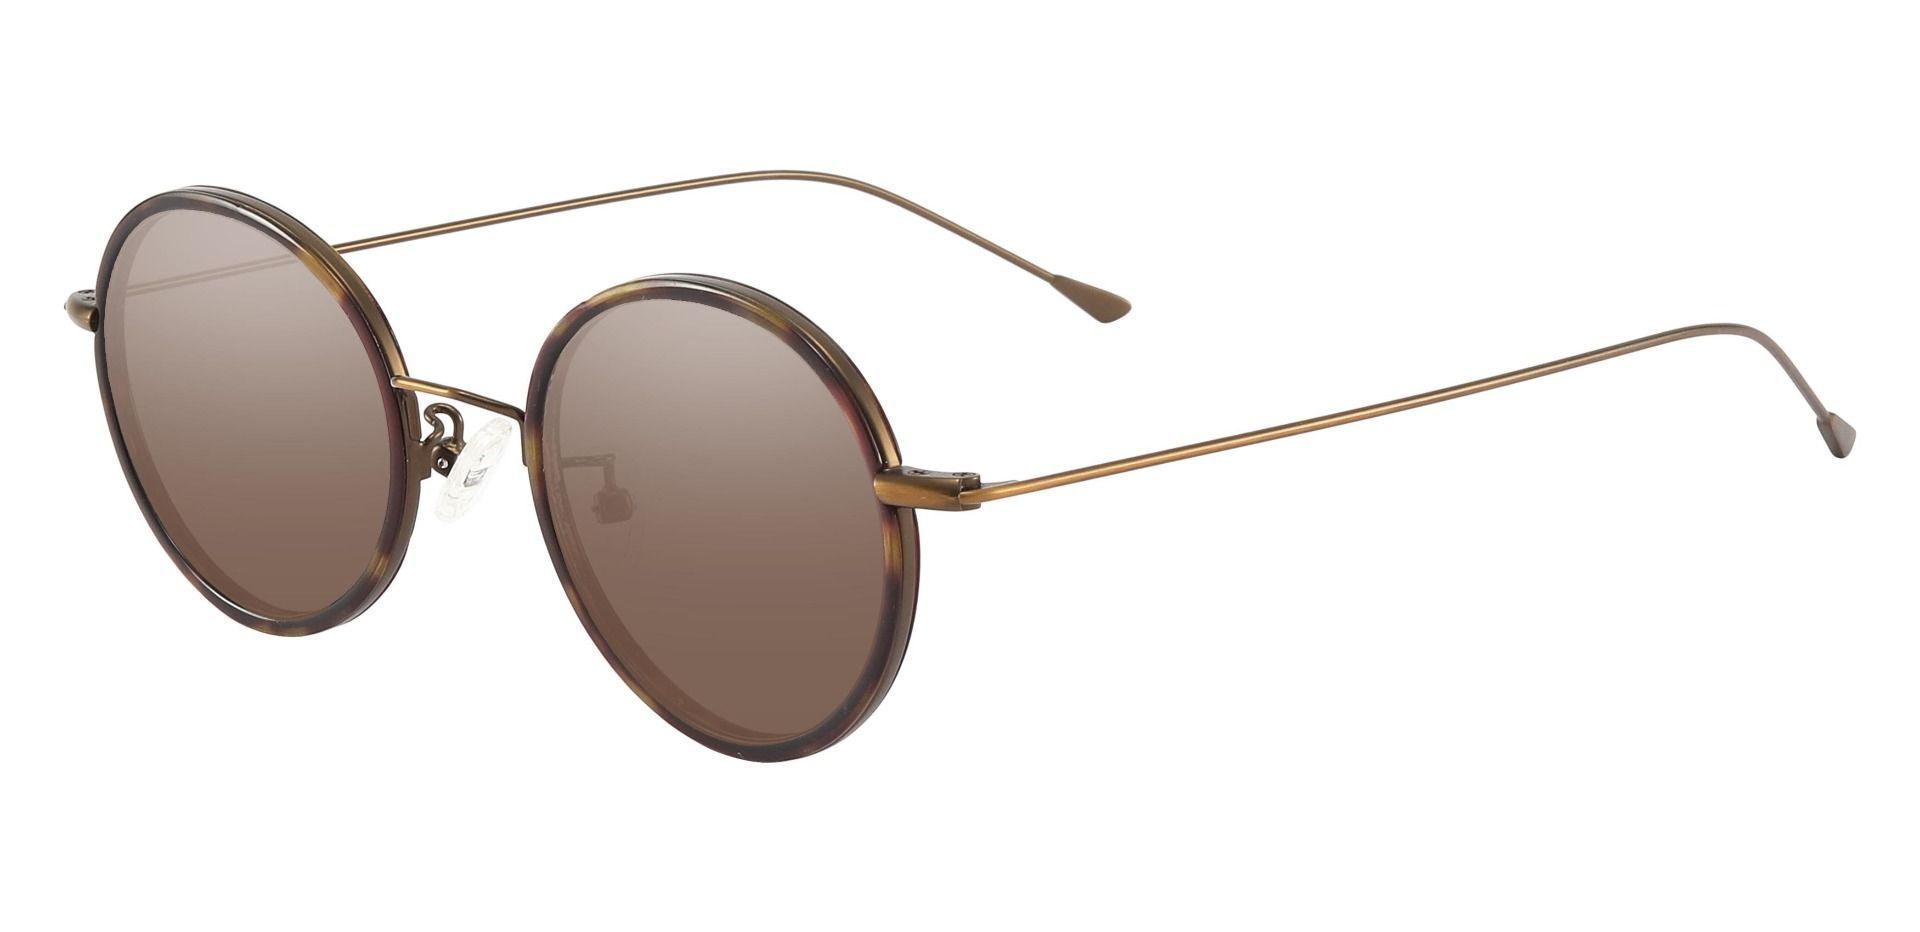 Malverne Oval Reading Sunglasses - Tortoise Frame With Brown Lenses